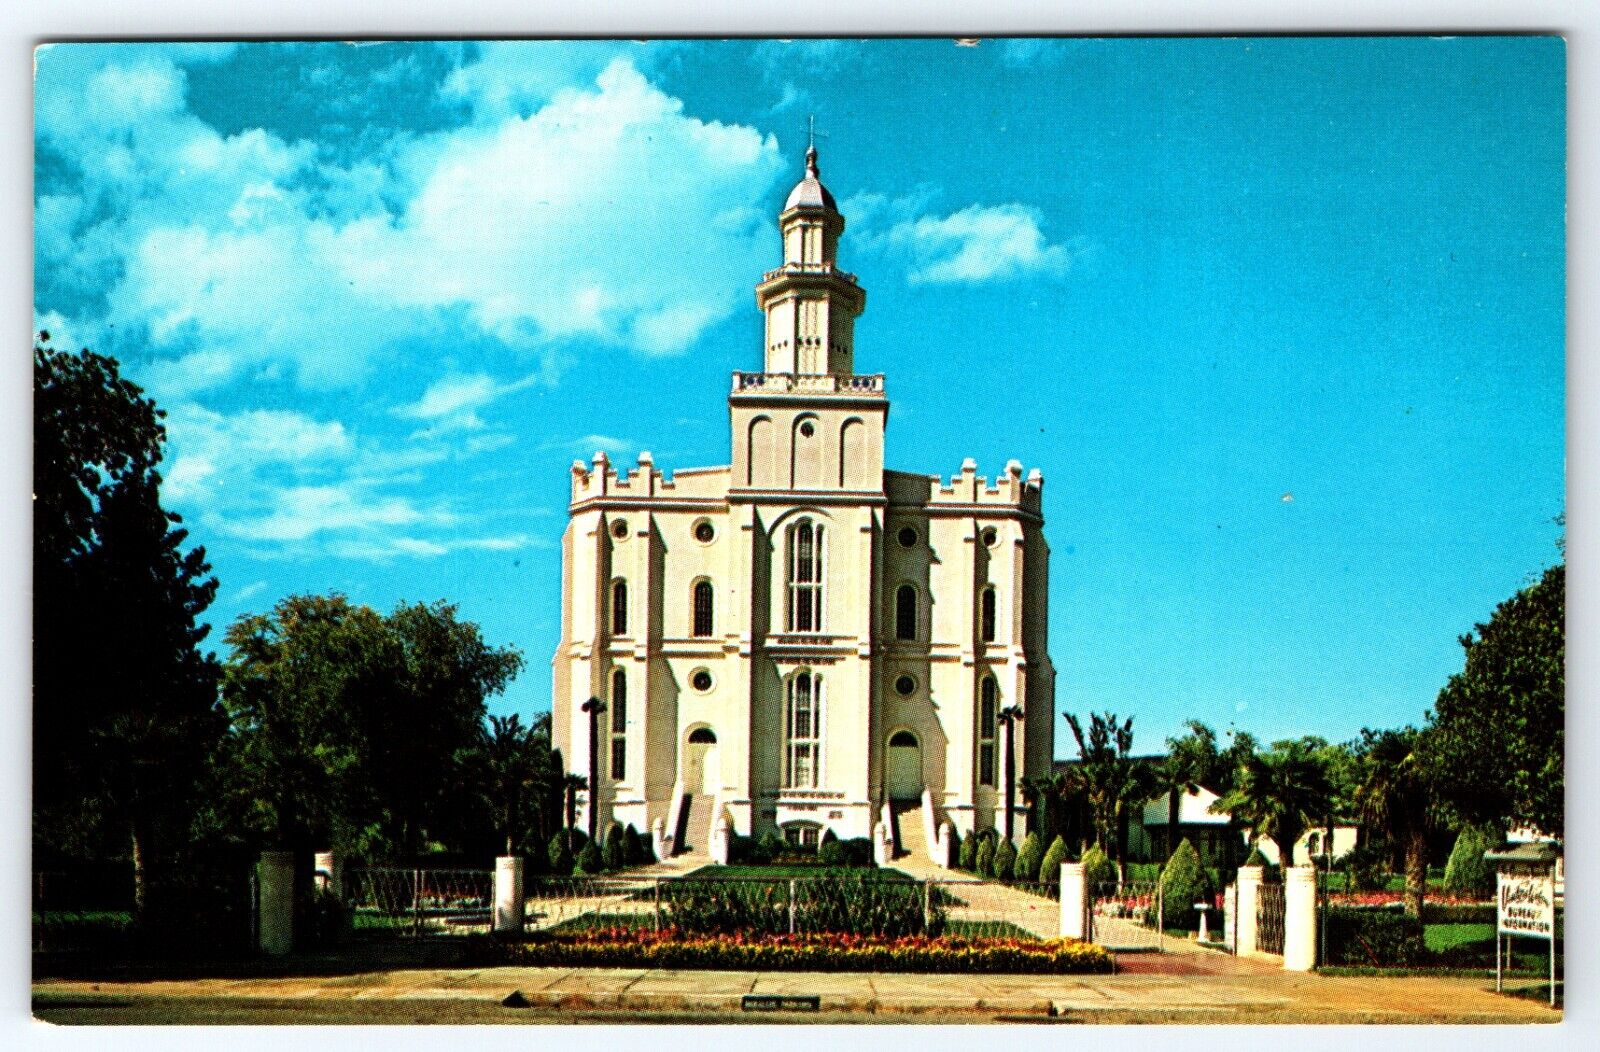 St. George Mormon Temple in St. George Utah Postcard